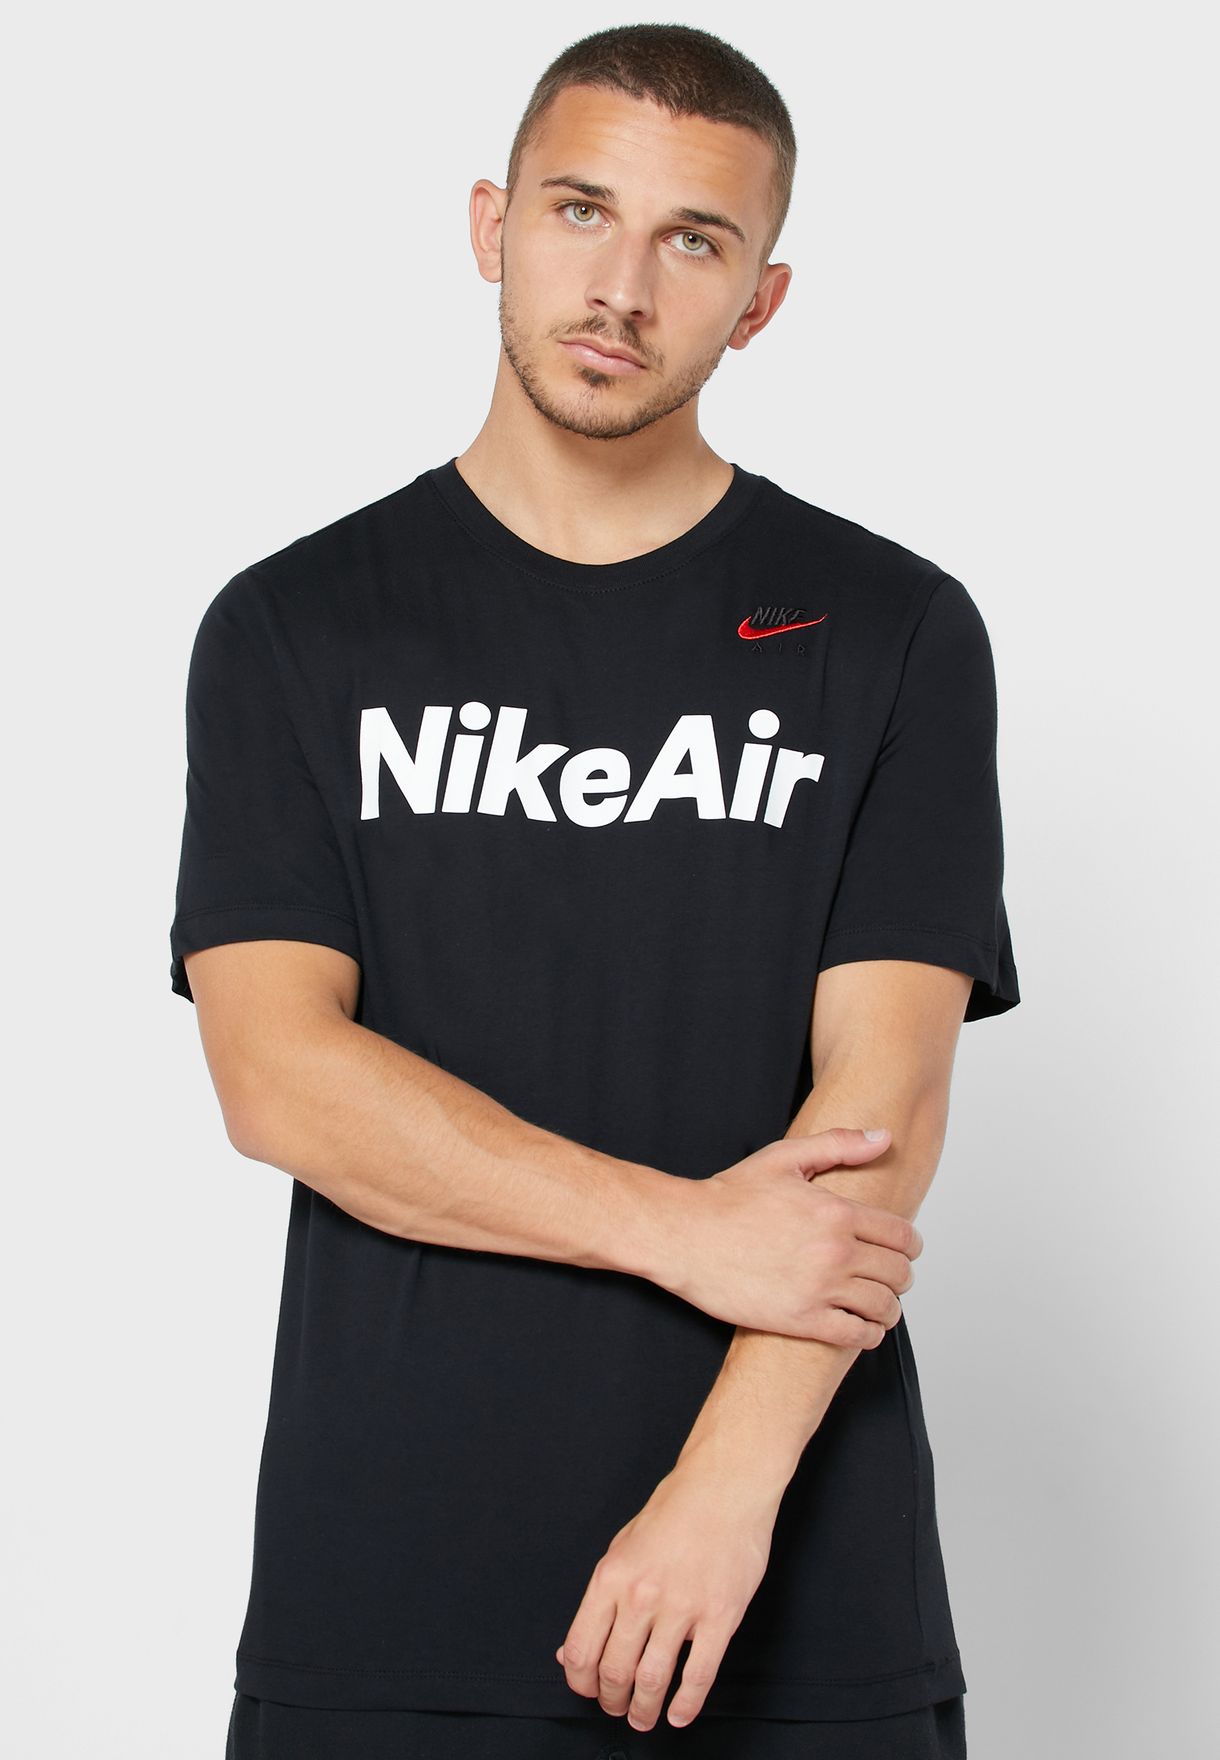 nike air black t shirt